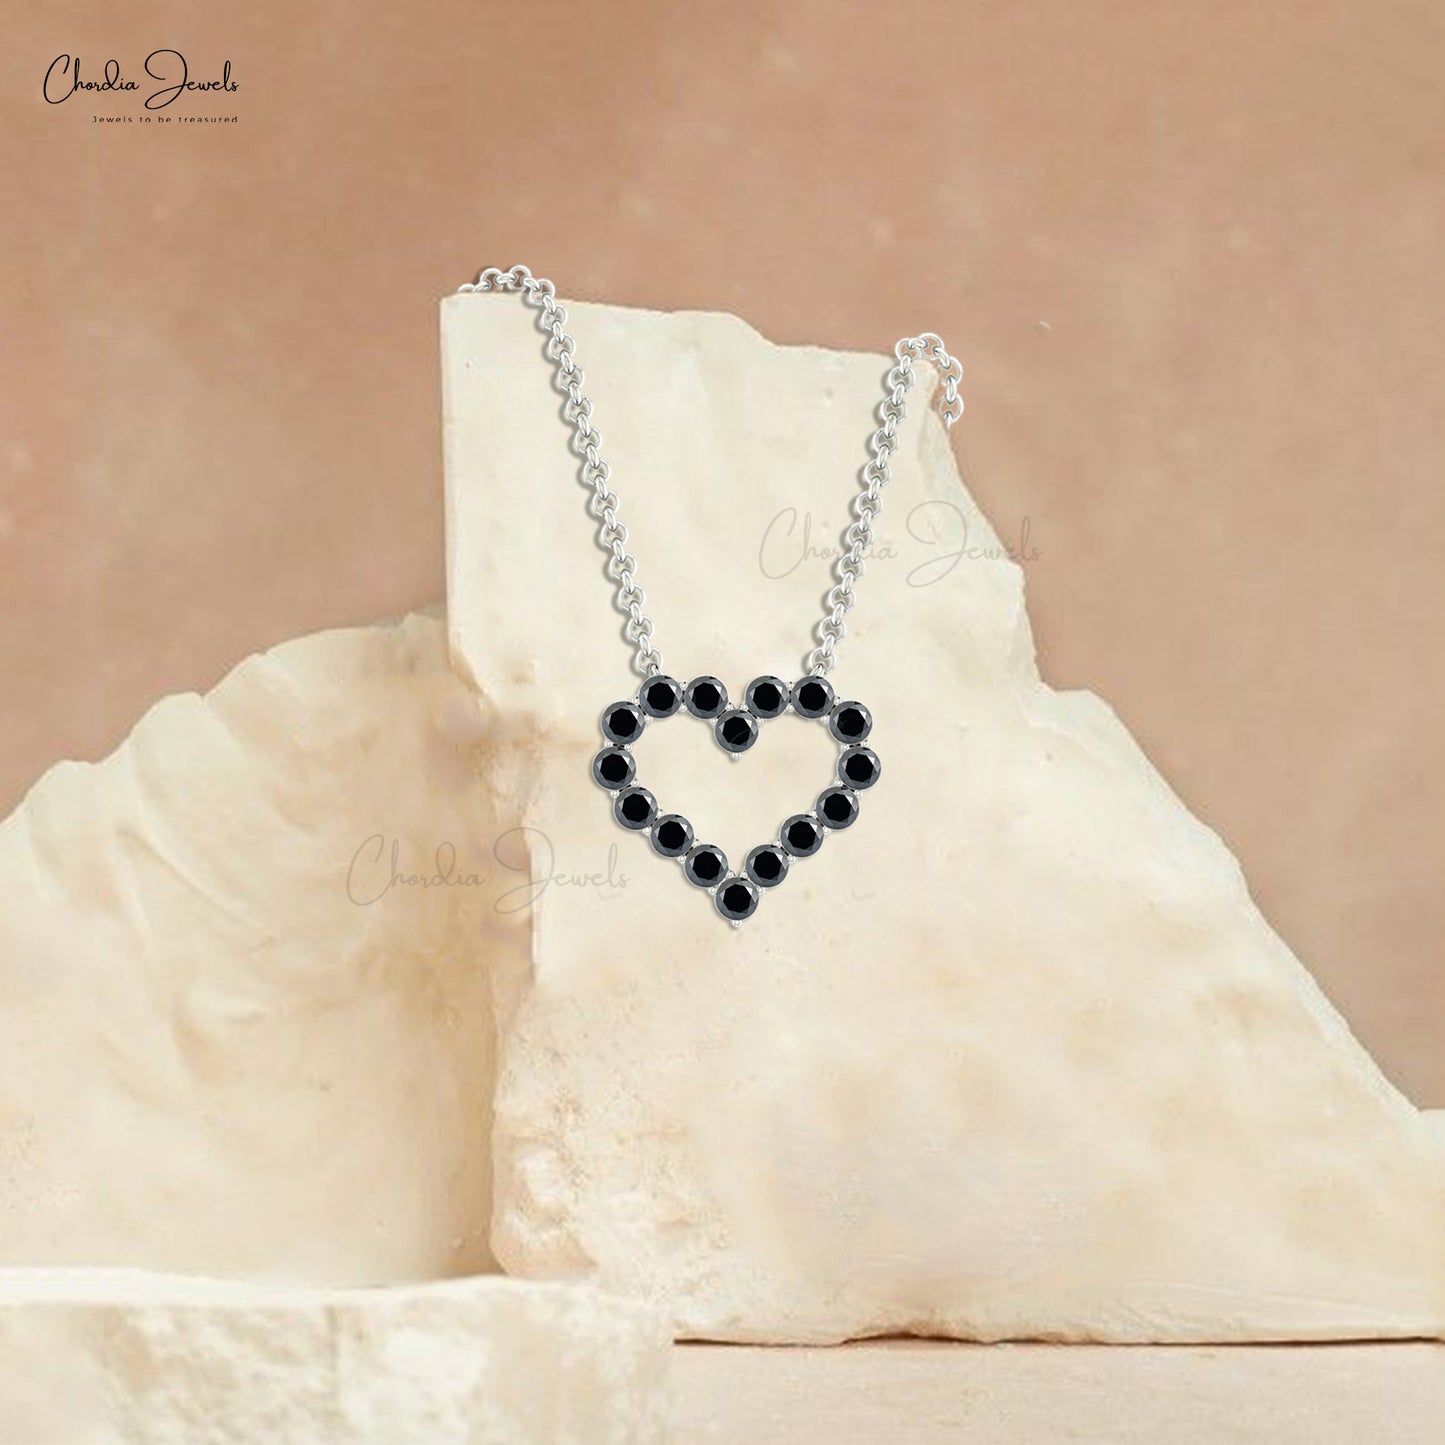 Genuine Black Diamond Designer Necklace 2mm Round Cut Gemstone Open Heart Necklace 14k Real Gold Summer Jewelry For Birthday Gift